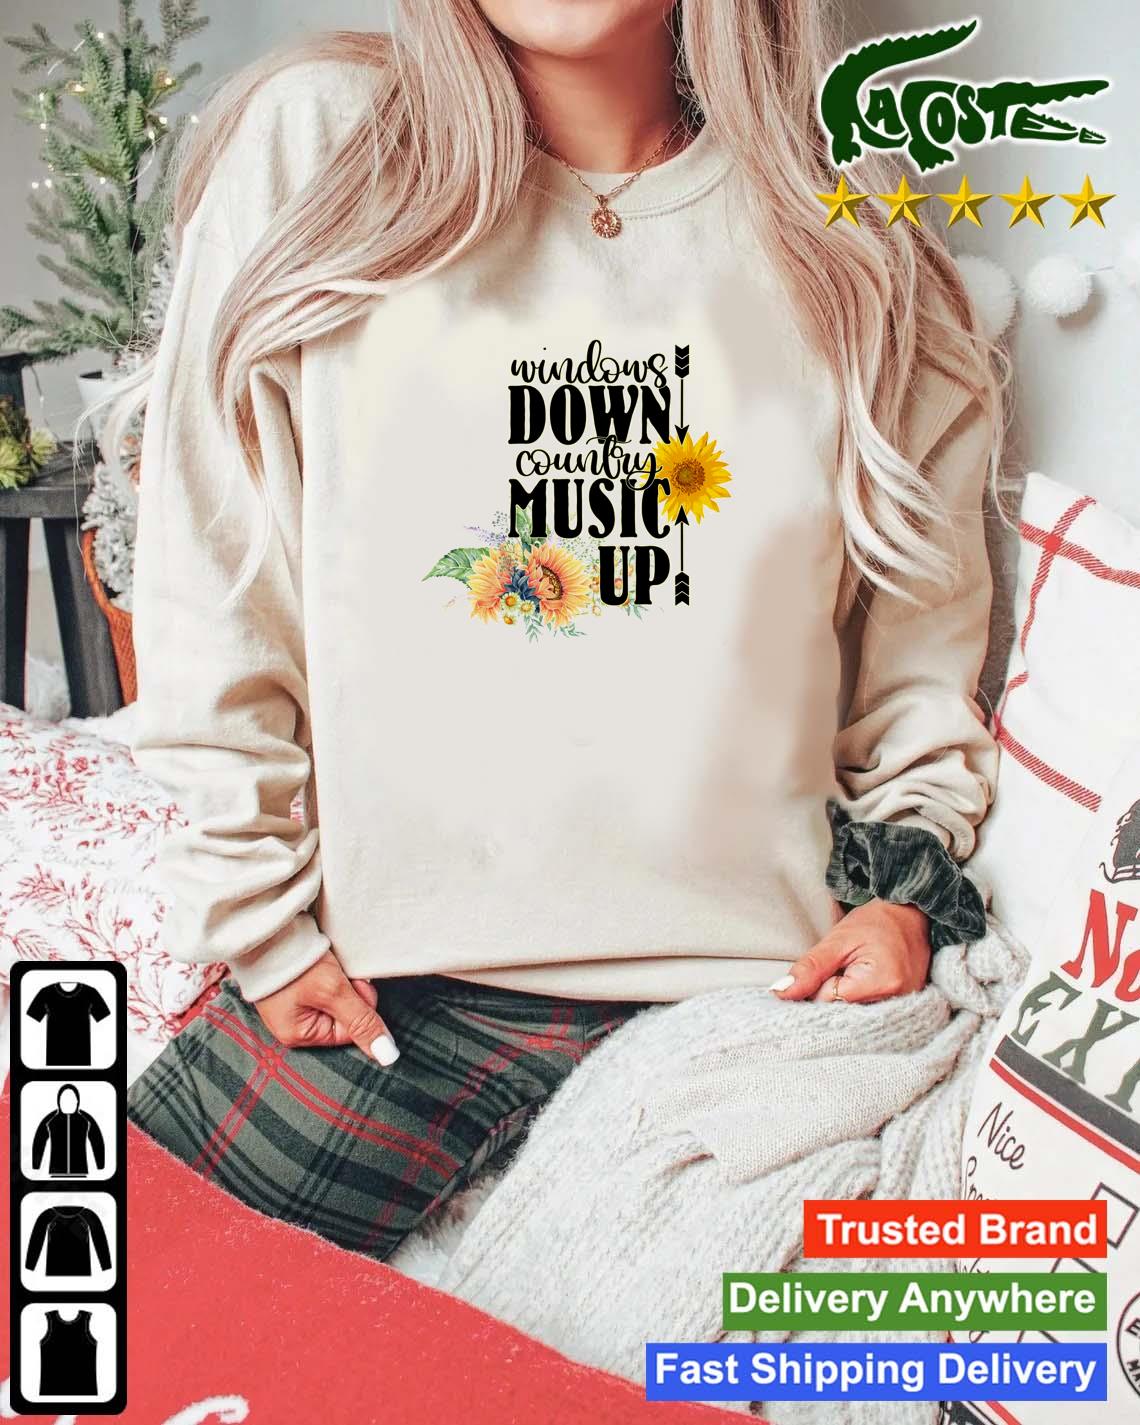 Windows Down Country Music Up Sweats Mockup Sweater